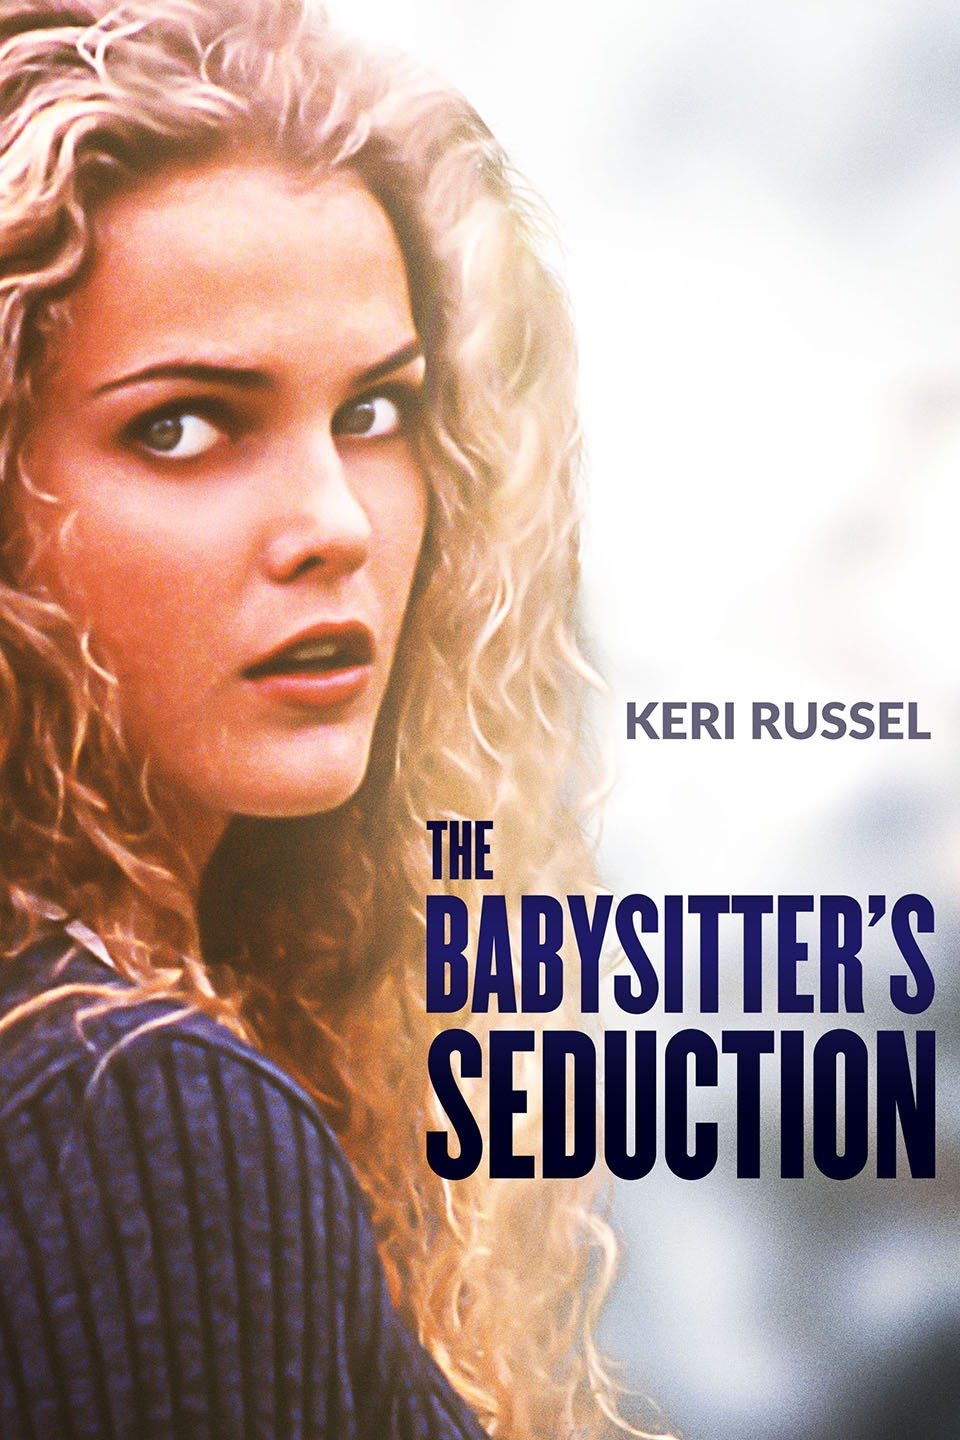 The Babysitter's Seduction Dvd (1996)